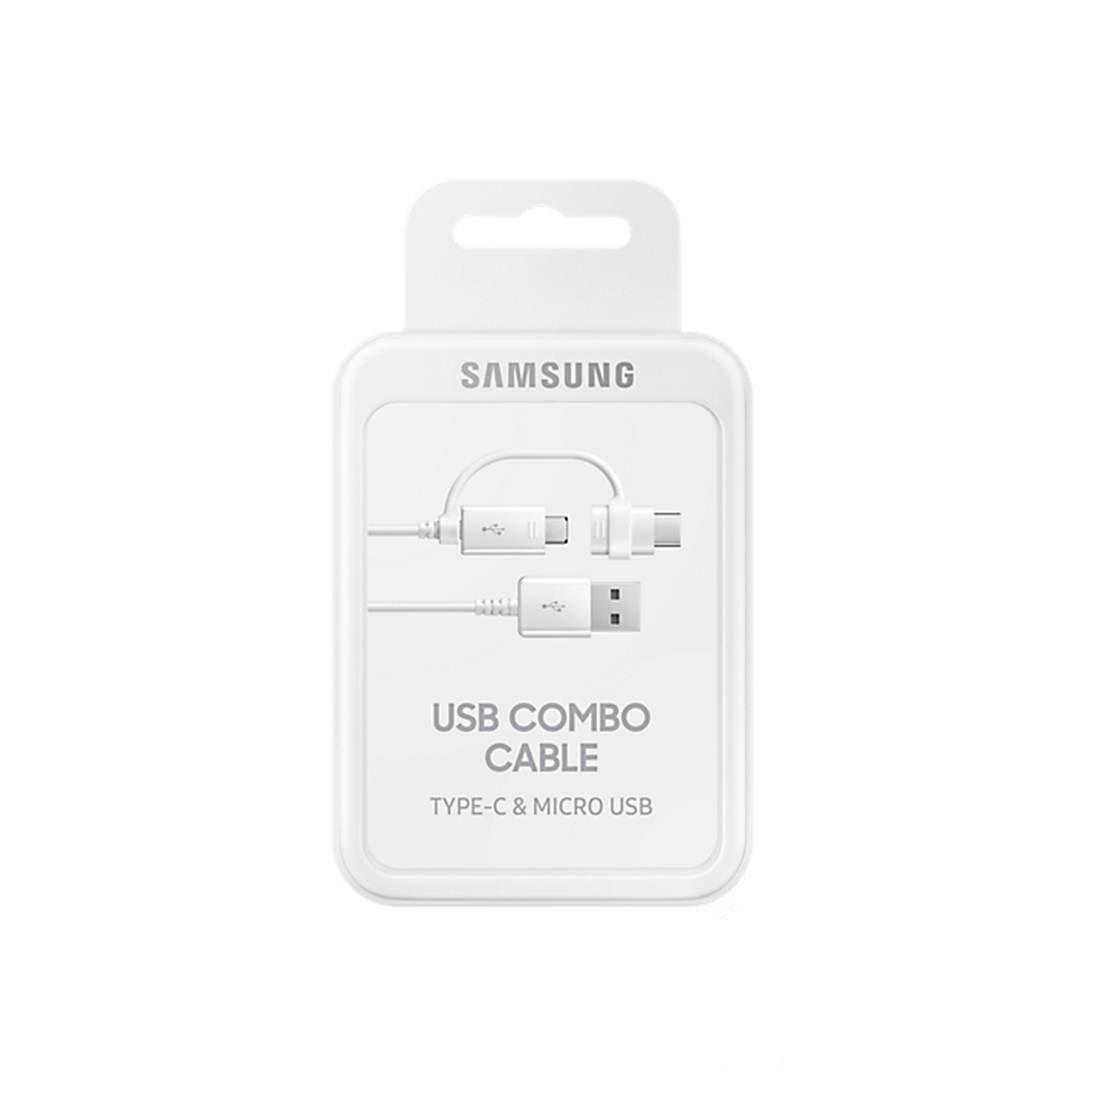 Cable COMBO USB Typ-C & Micro USB